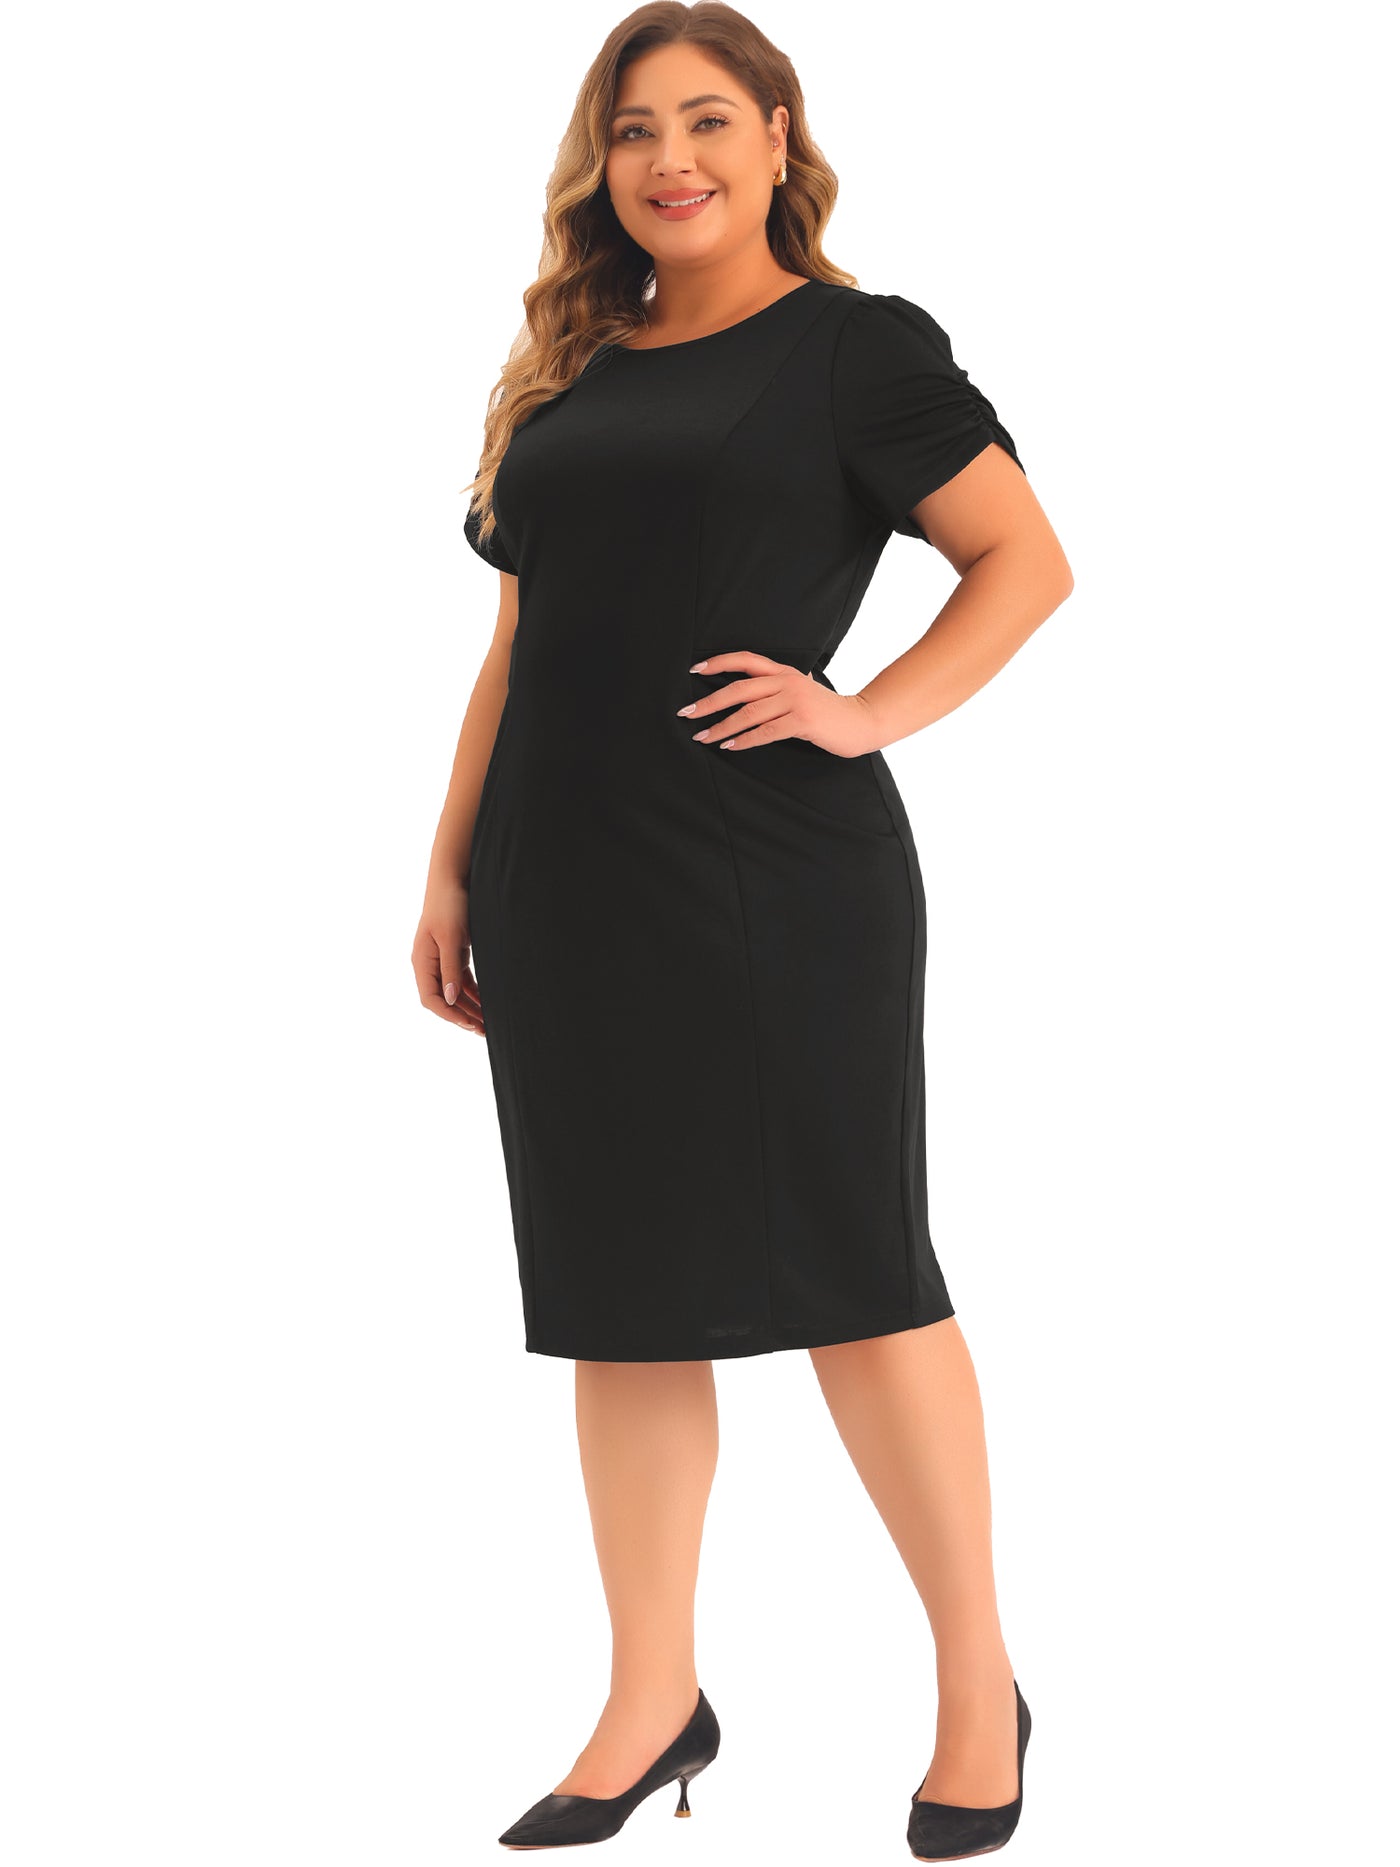 Bublédon Plus Size Short Sleeve Above the Knee Sheath Office Wear to Work Dress